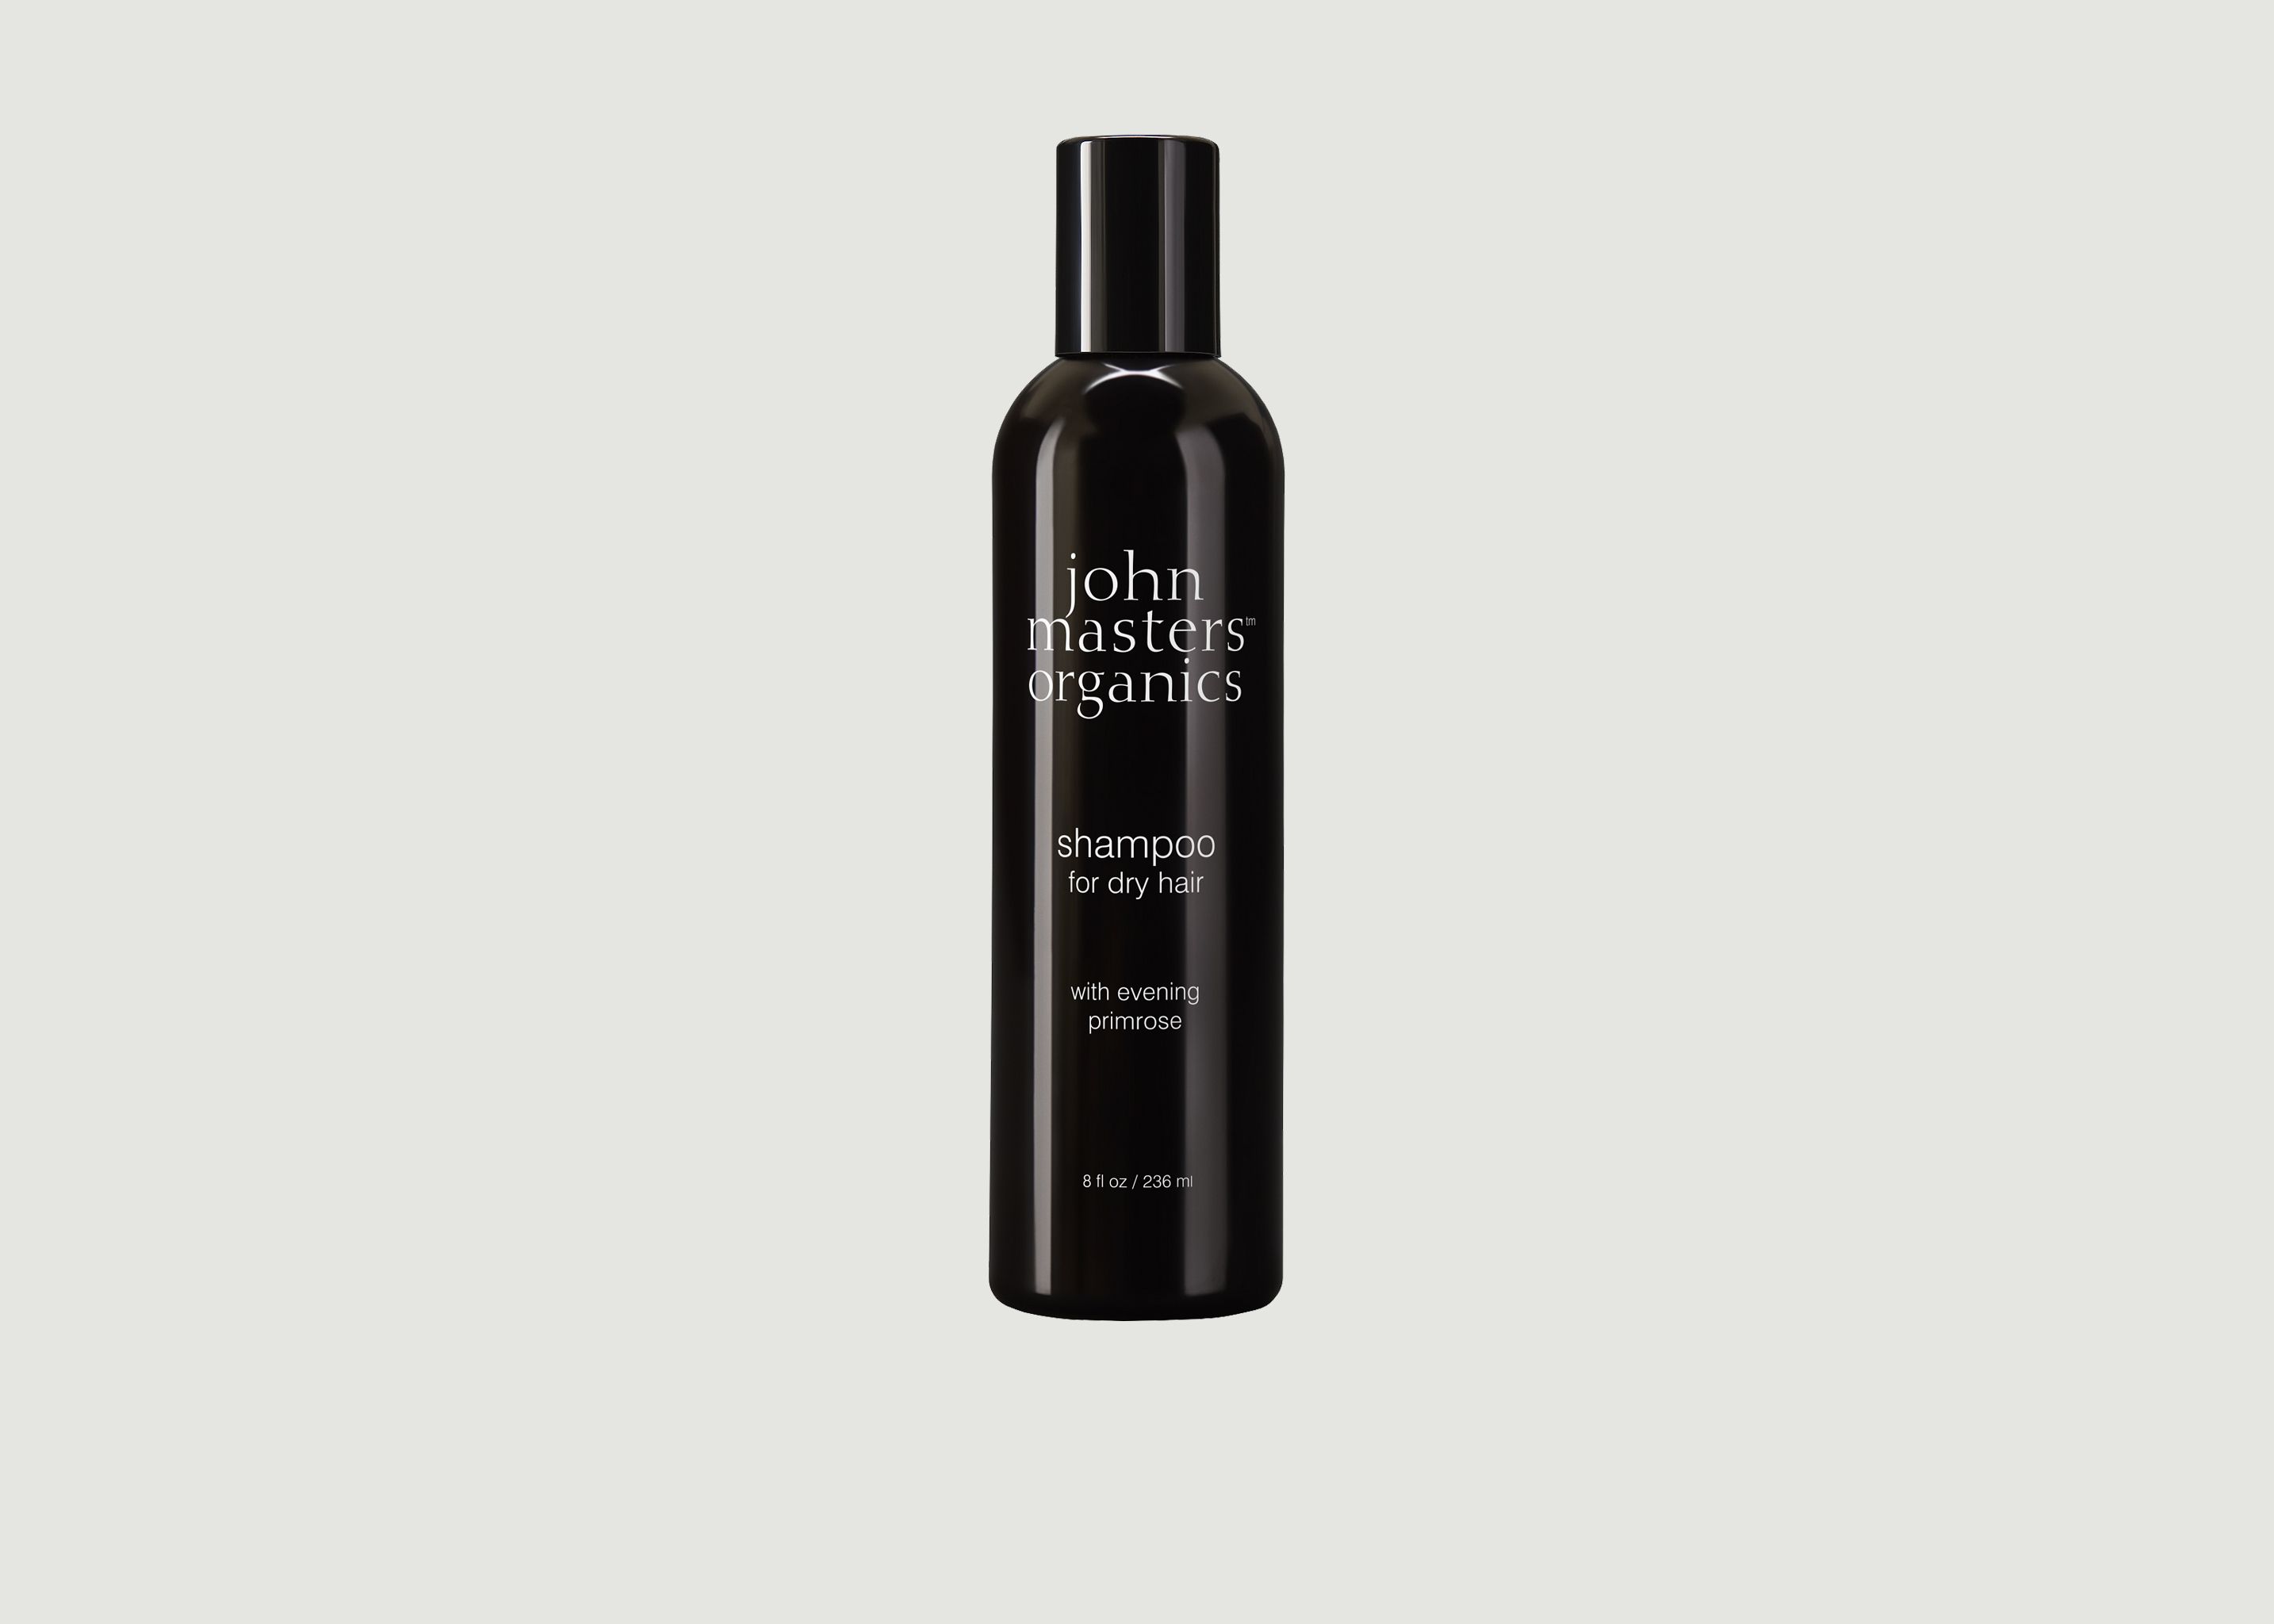 Shampoo for dry hair with evening primrose oil - John Masters Organics